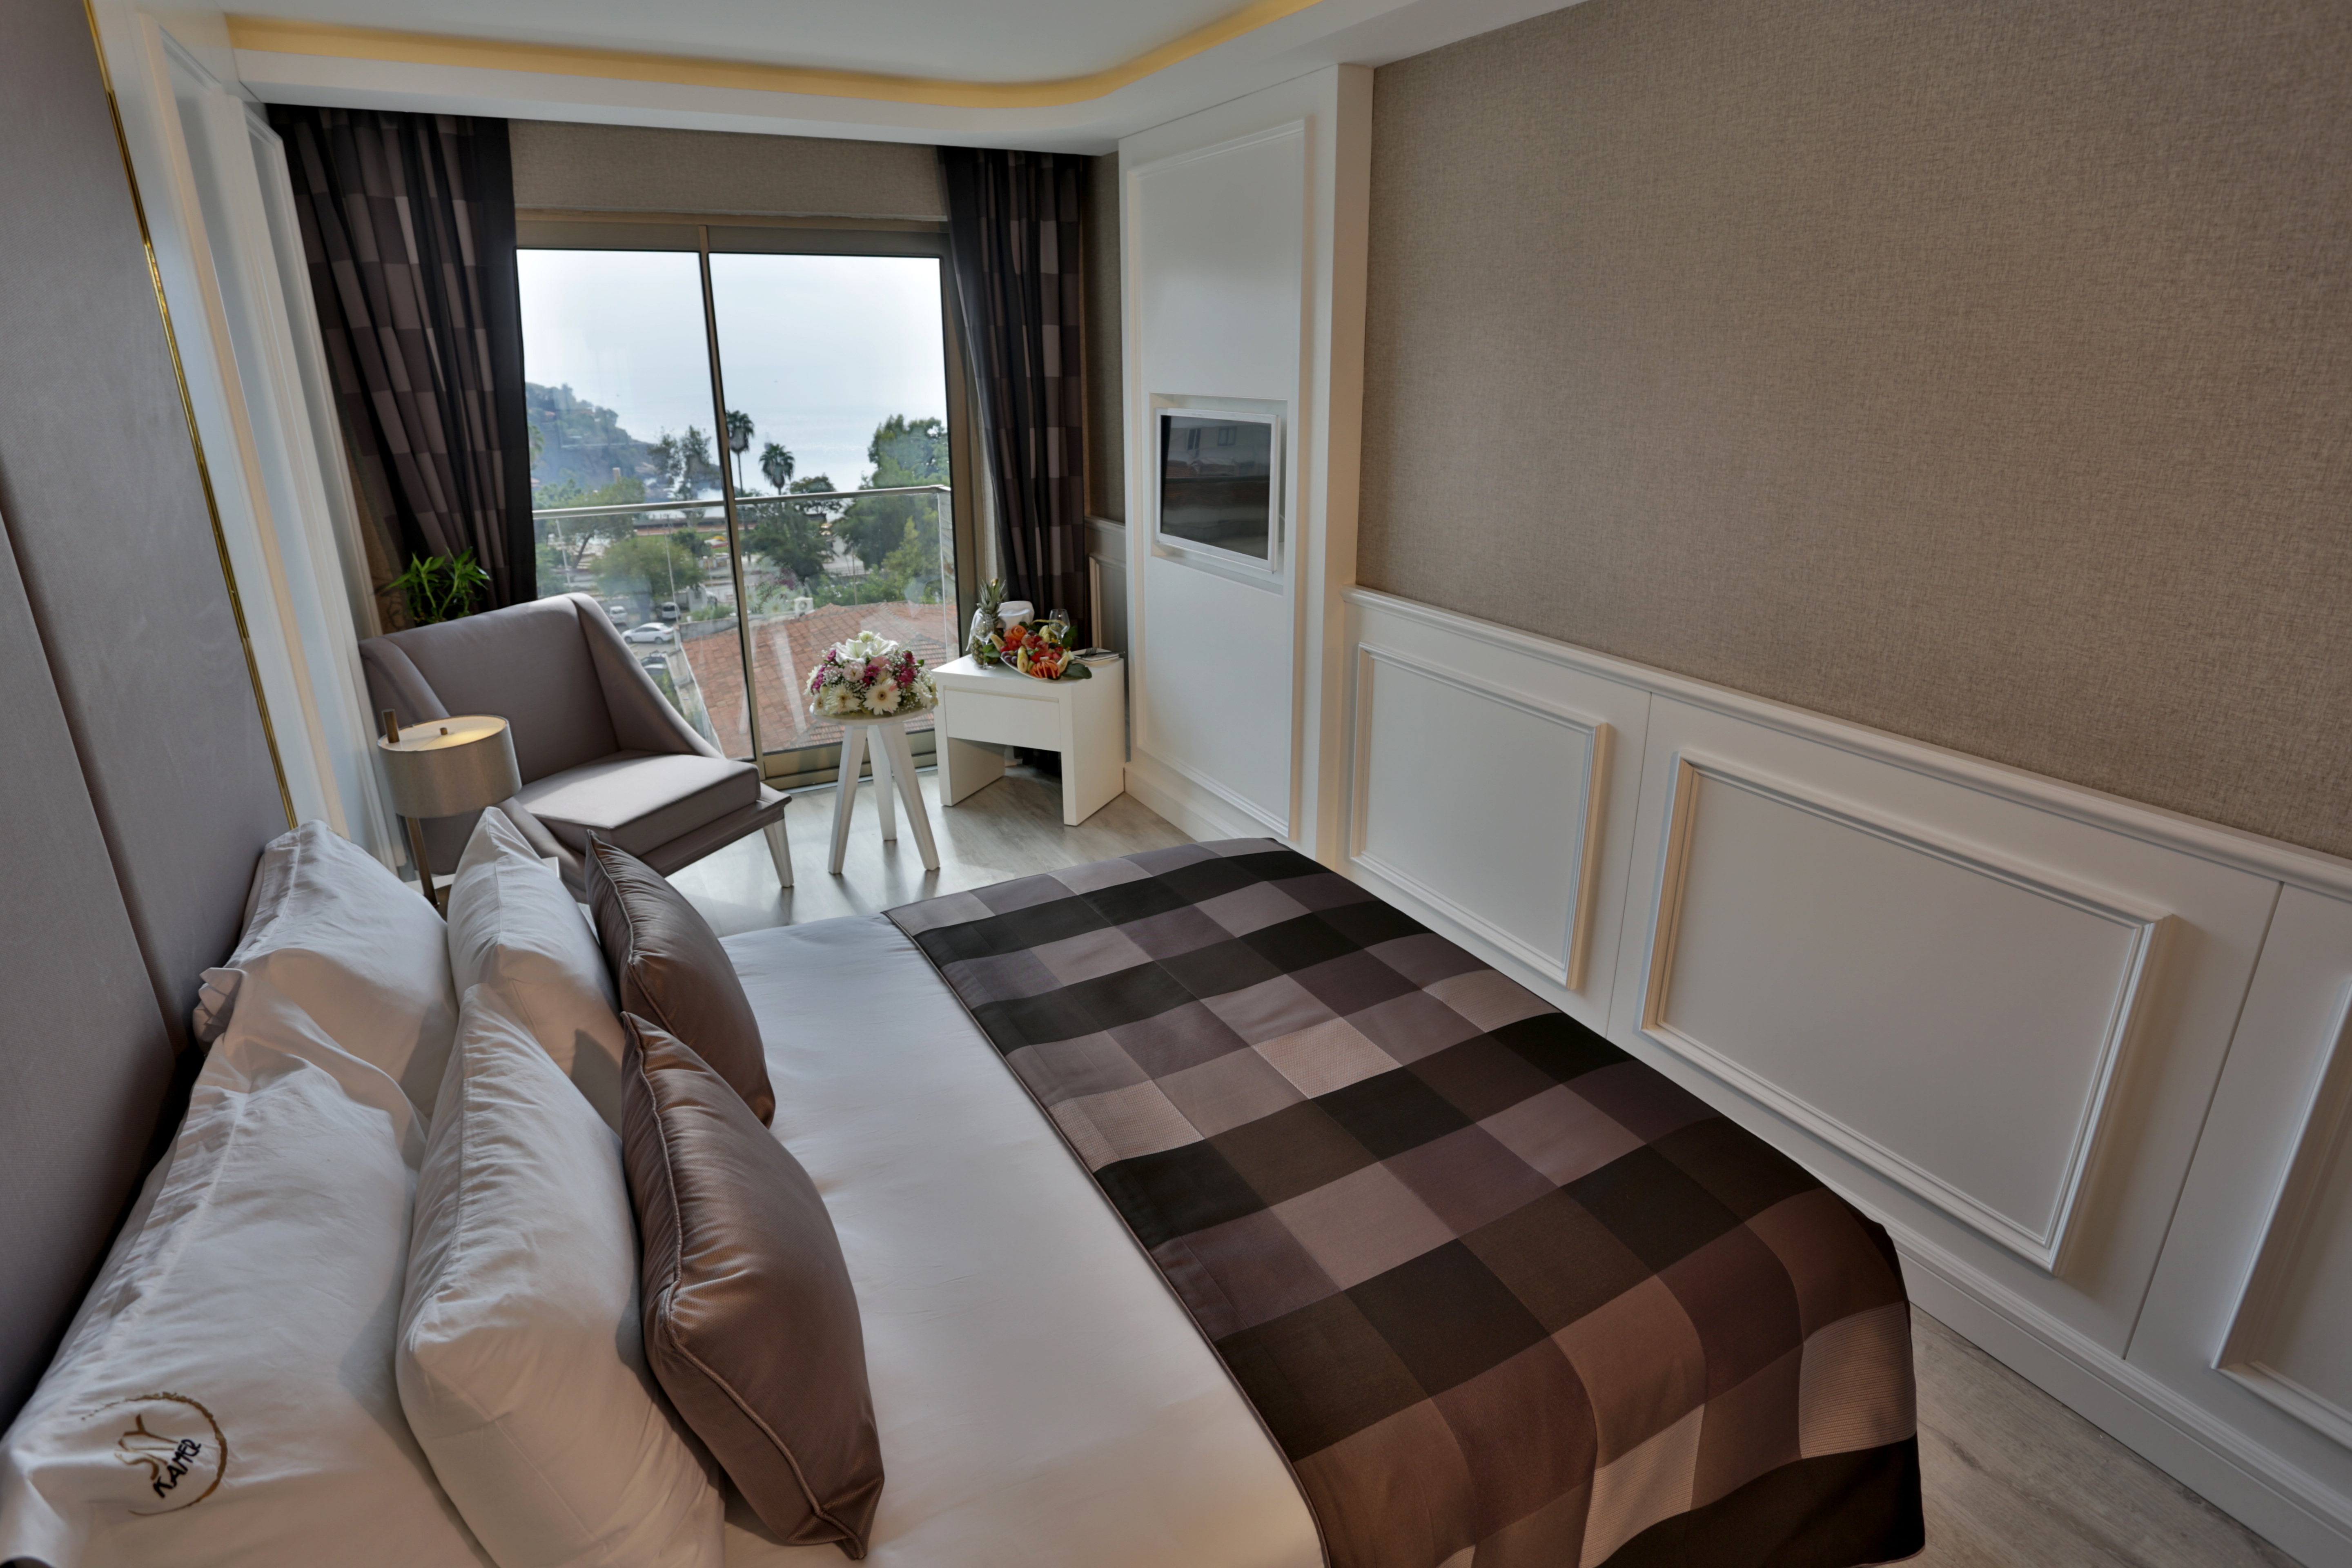 Sky Kamer Hotel Antalya,Antalya 2023 | Trip.com